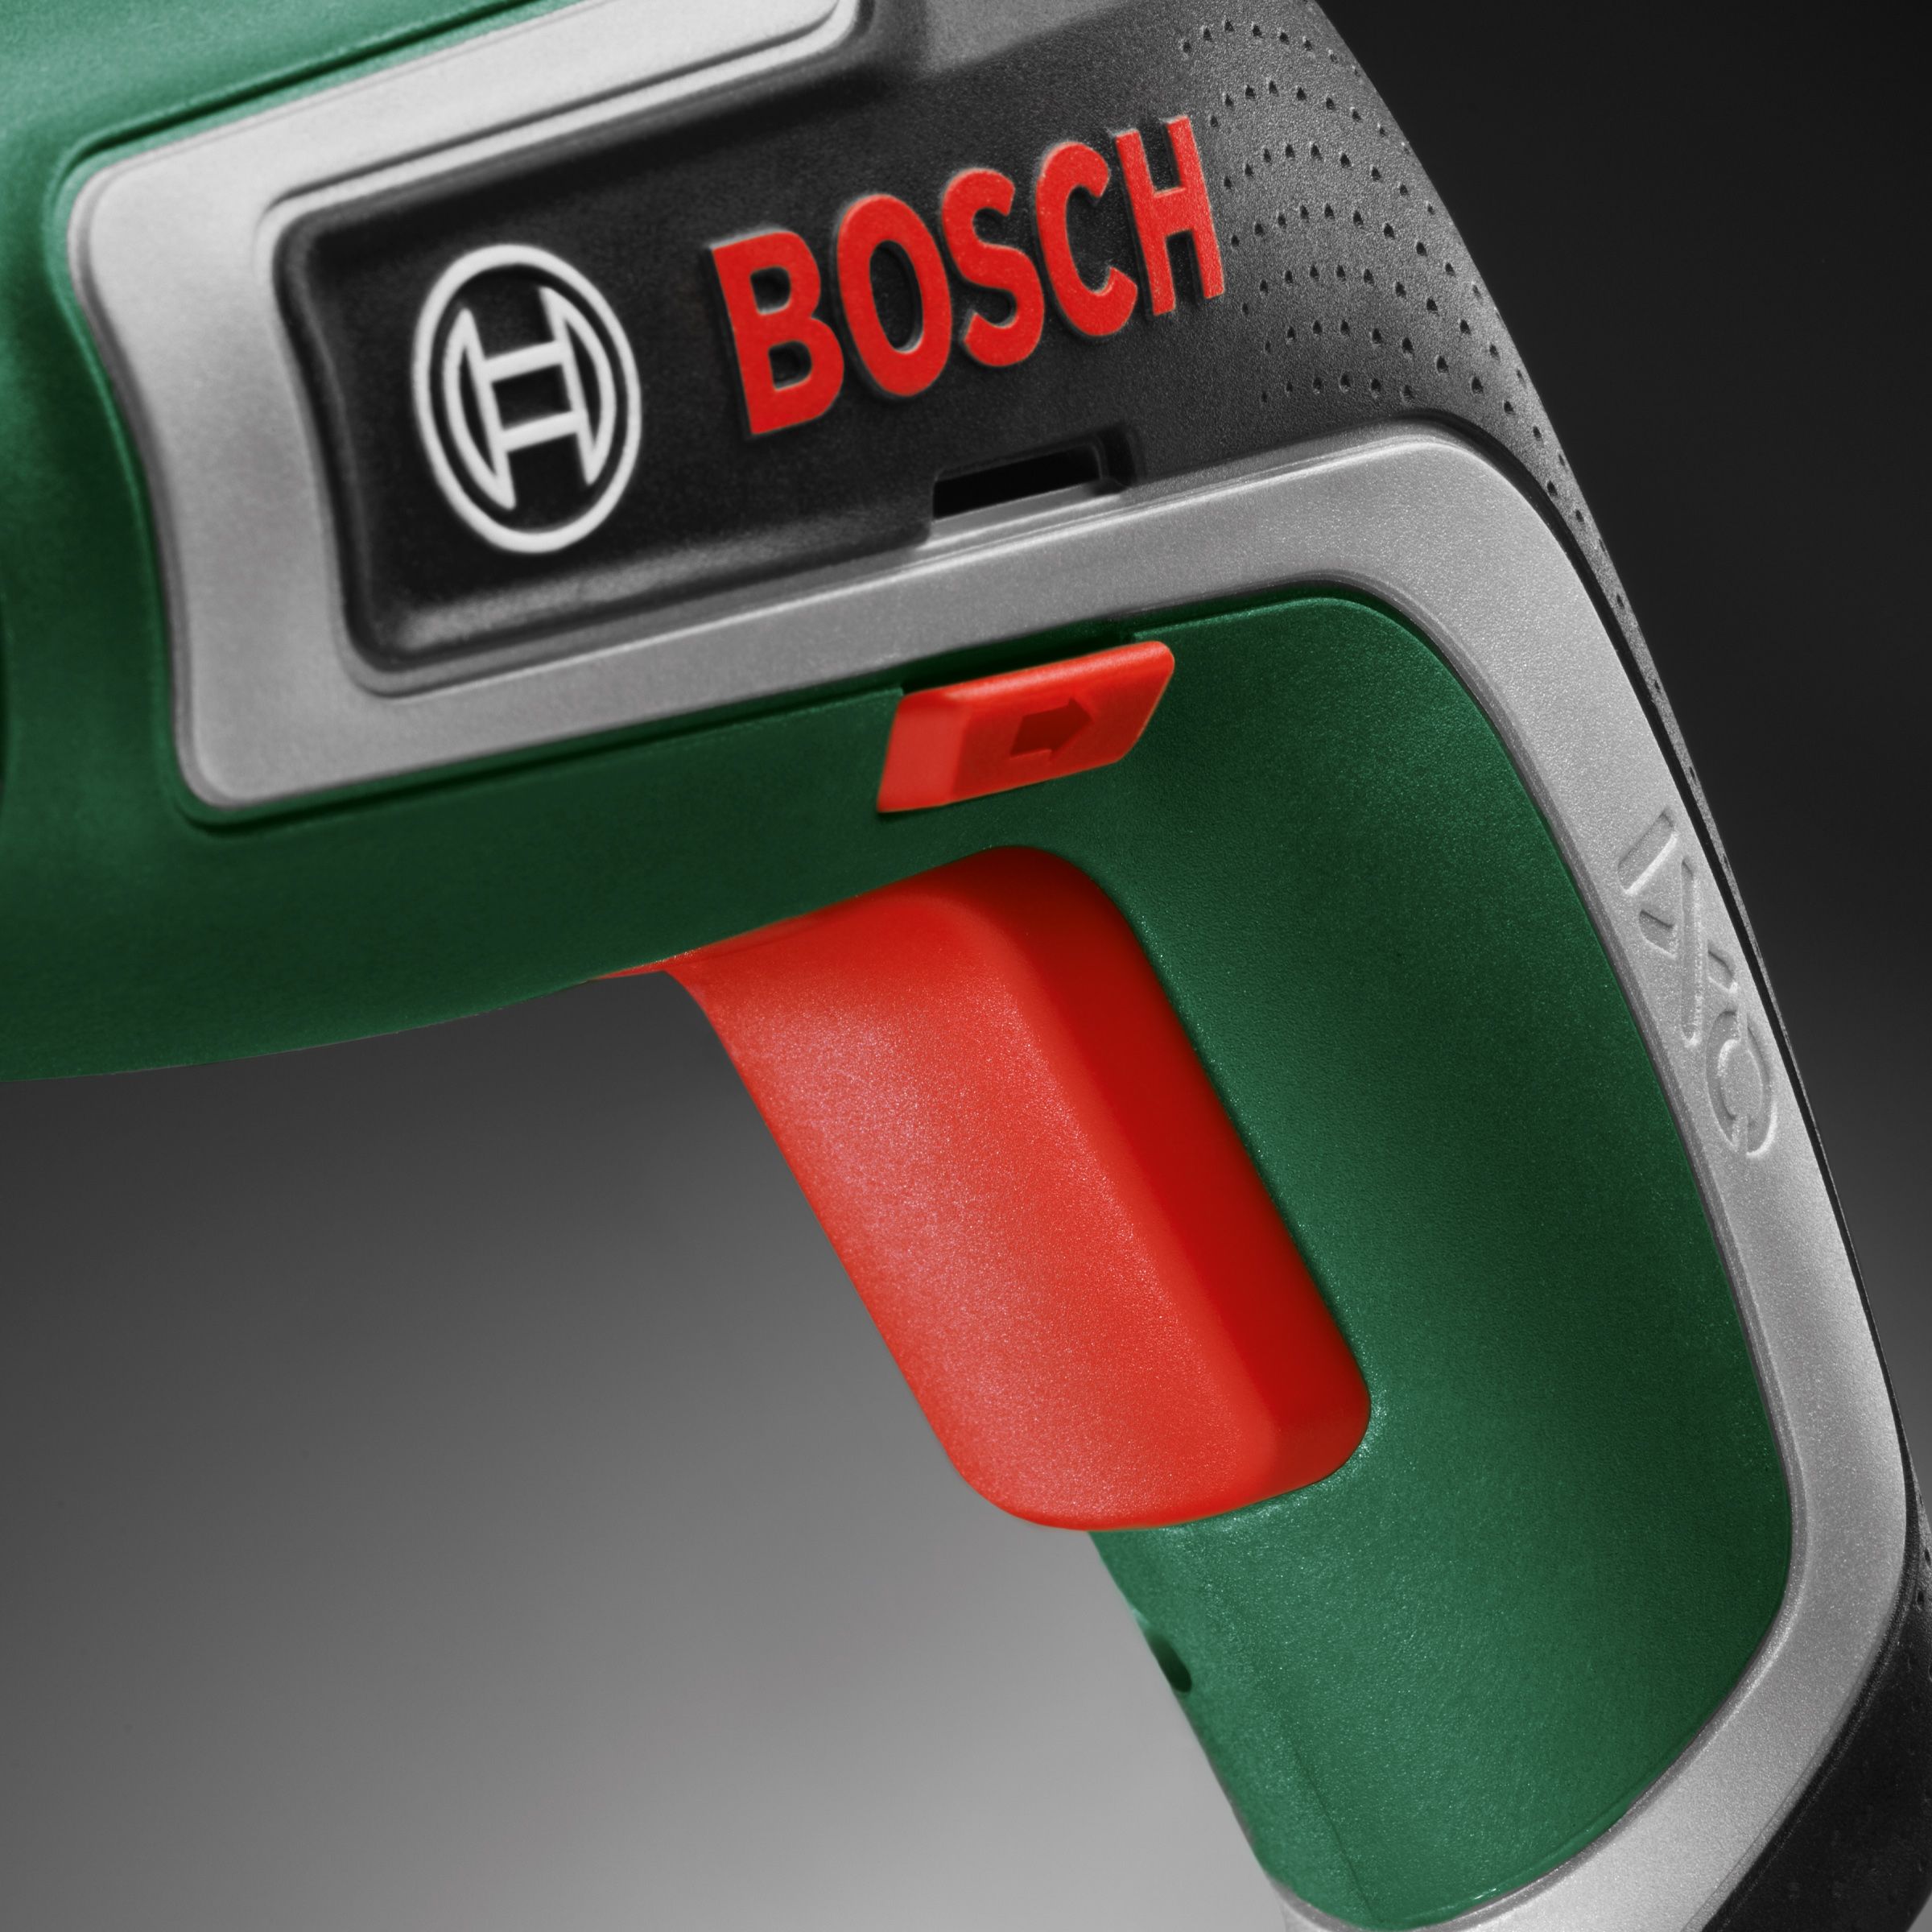 Bosch IXO 7 Cordless Screwdriver with BBQ Blower attachment – Bosch By BGE